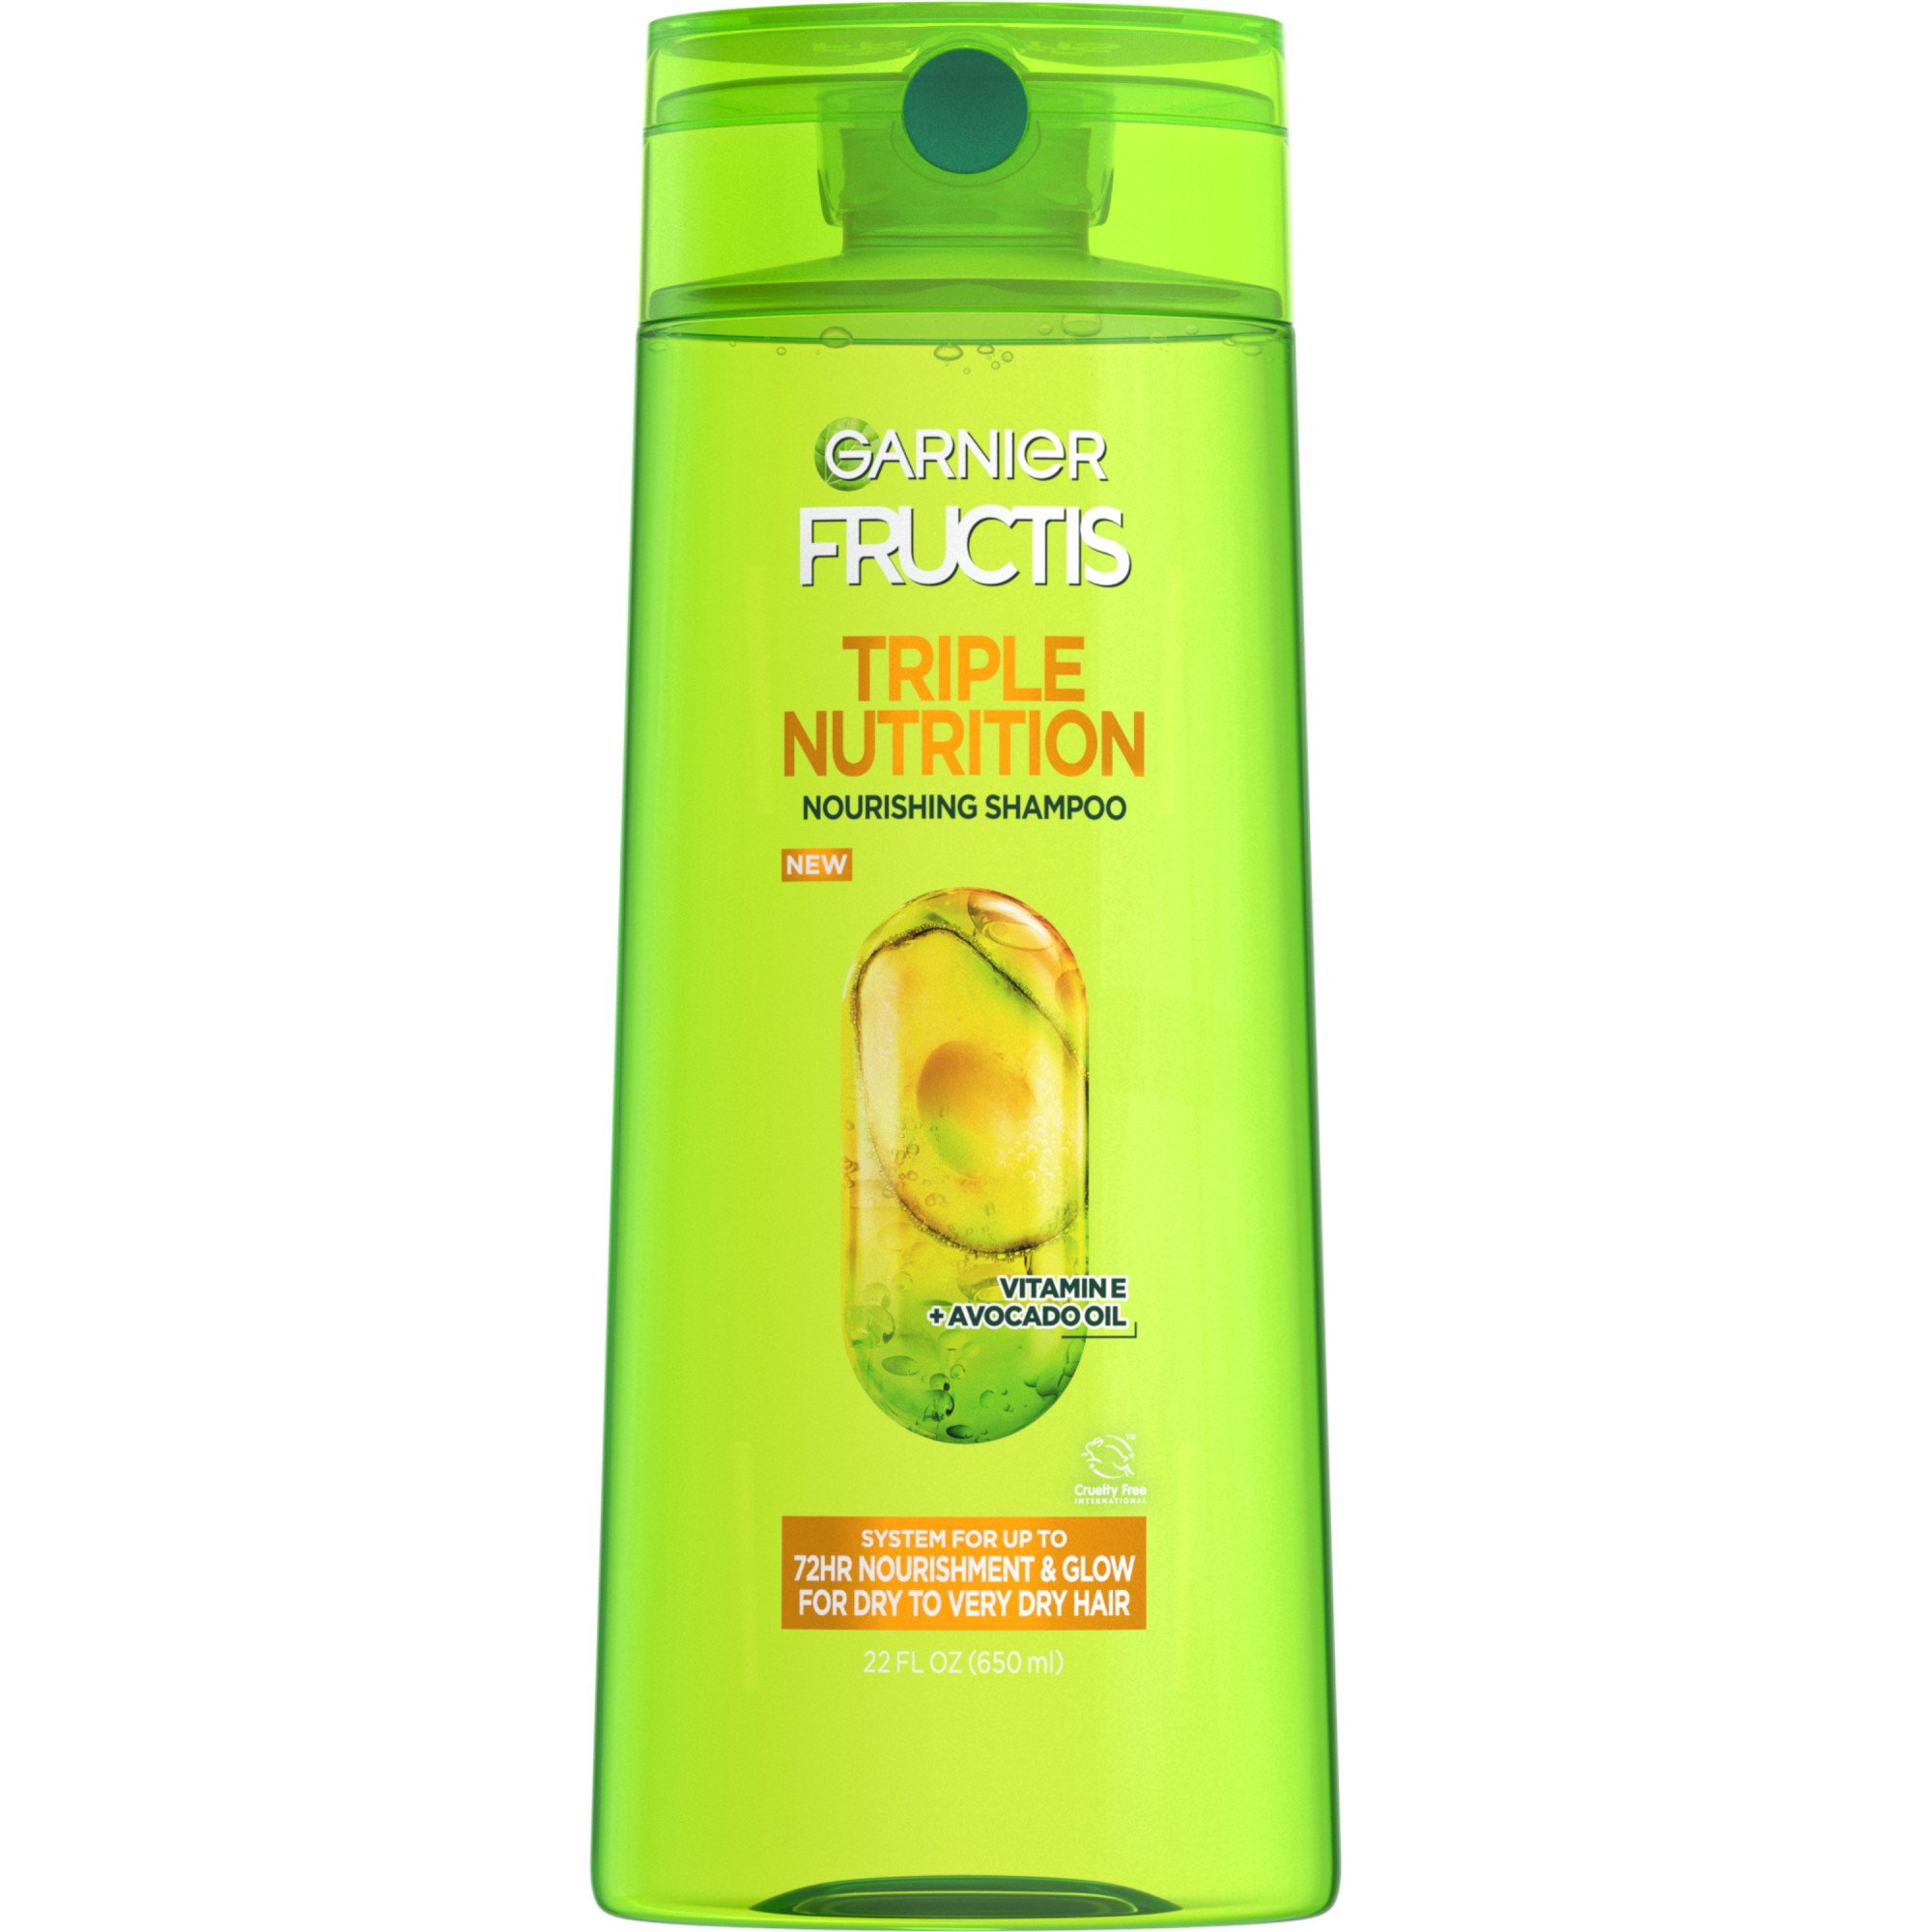 Fructis Triple Nutrition Nourishing Shampoo Shop & Conditioner at H-E-B